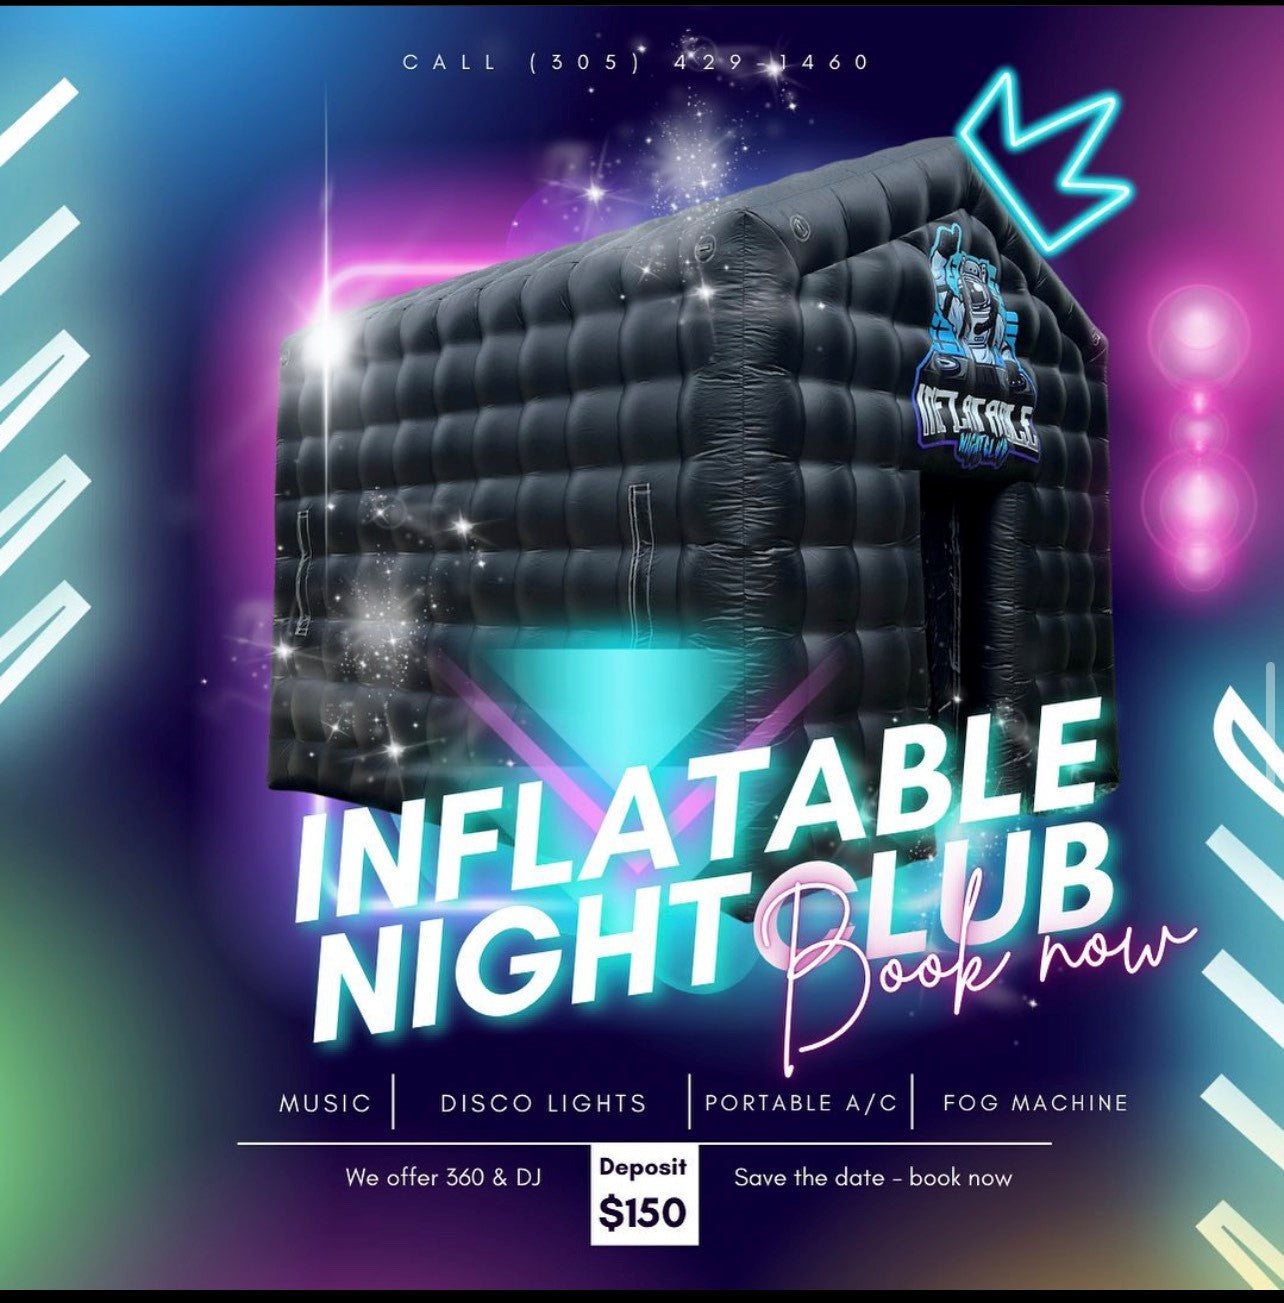 Inflatable nightclub (BIG) DEPOSIT